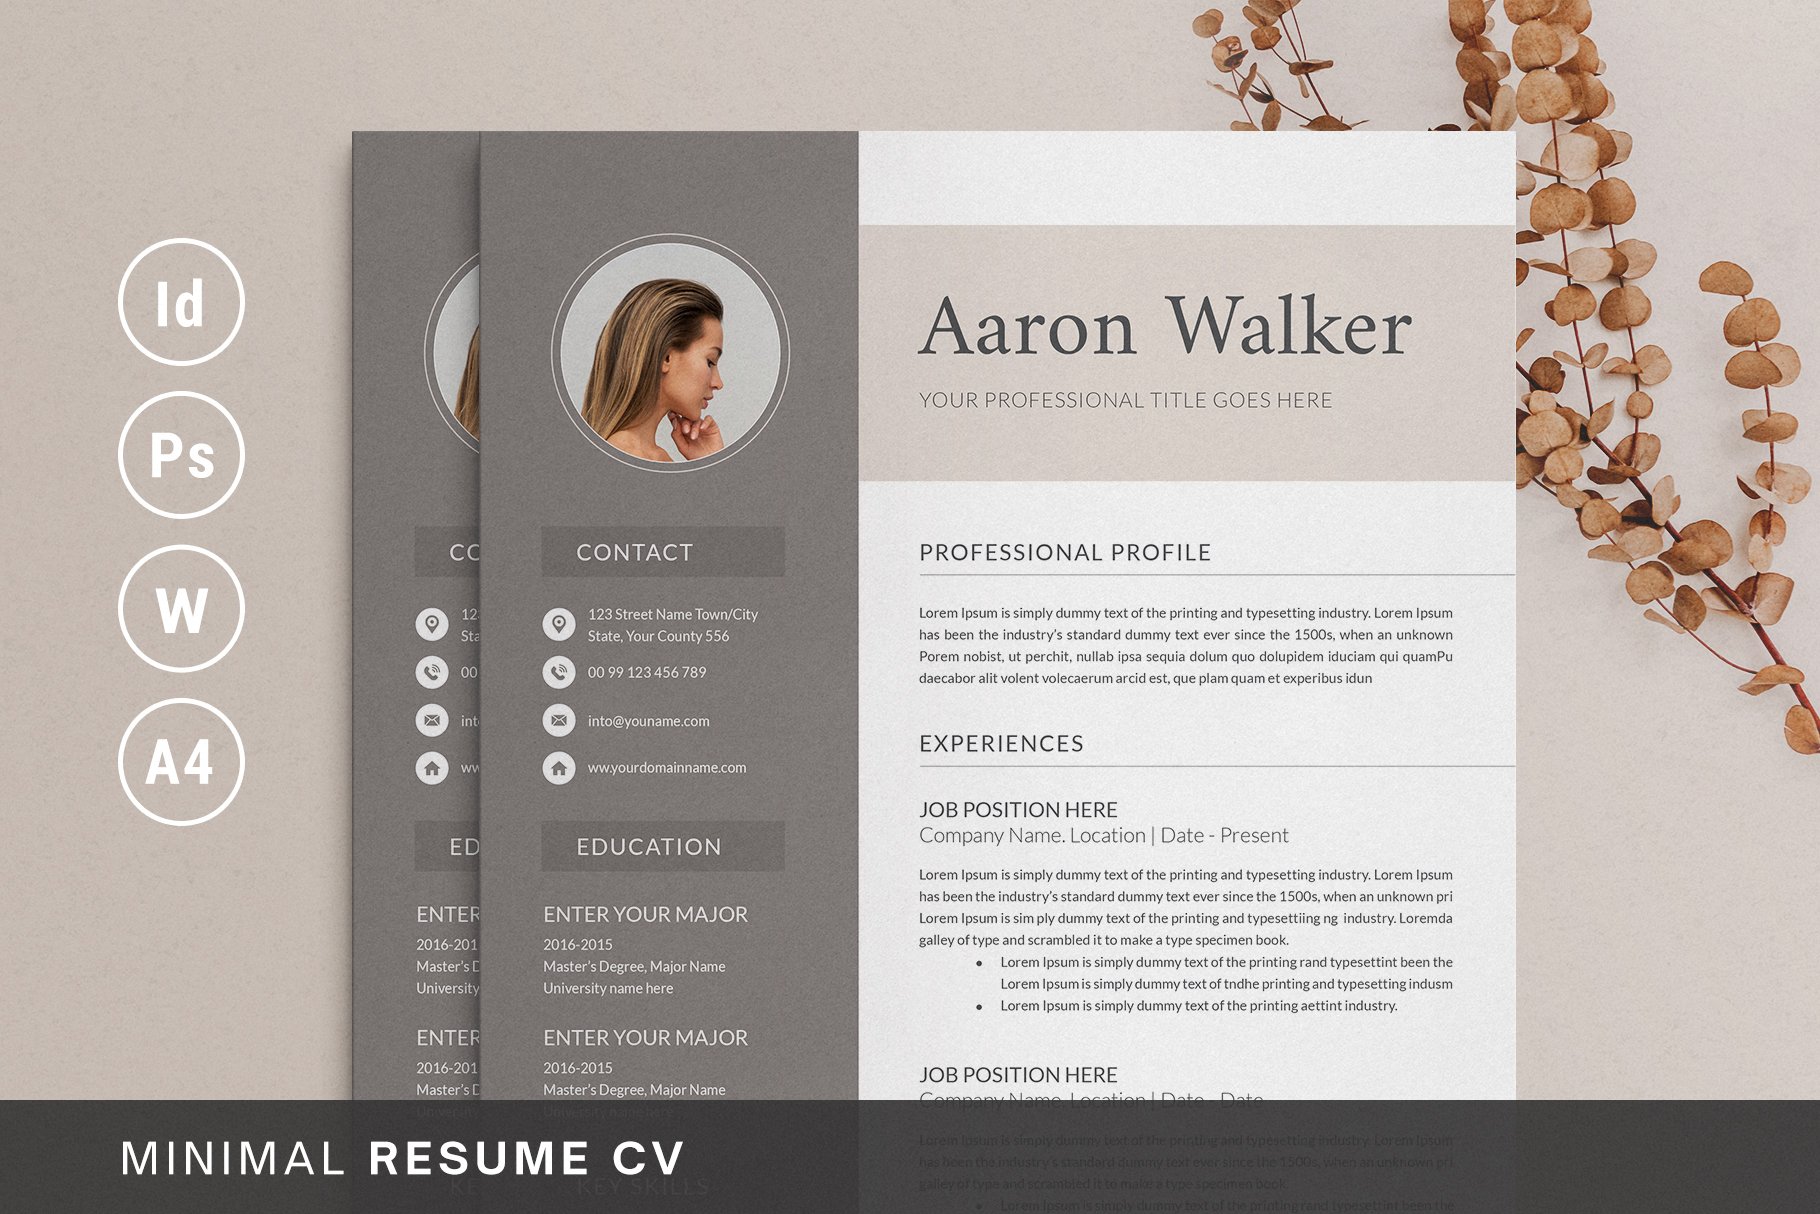 Creative resume template / CV cover image.